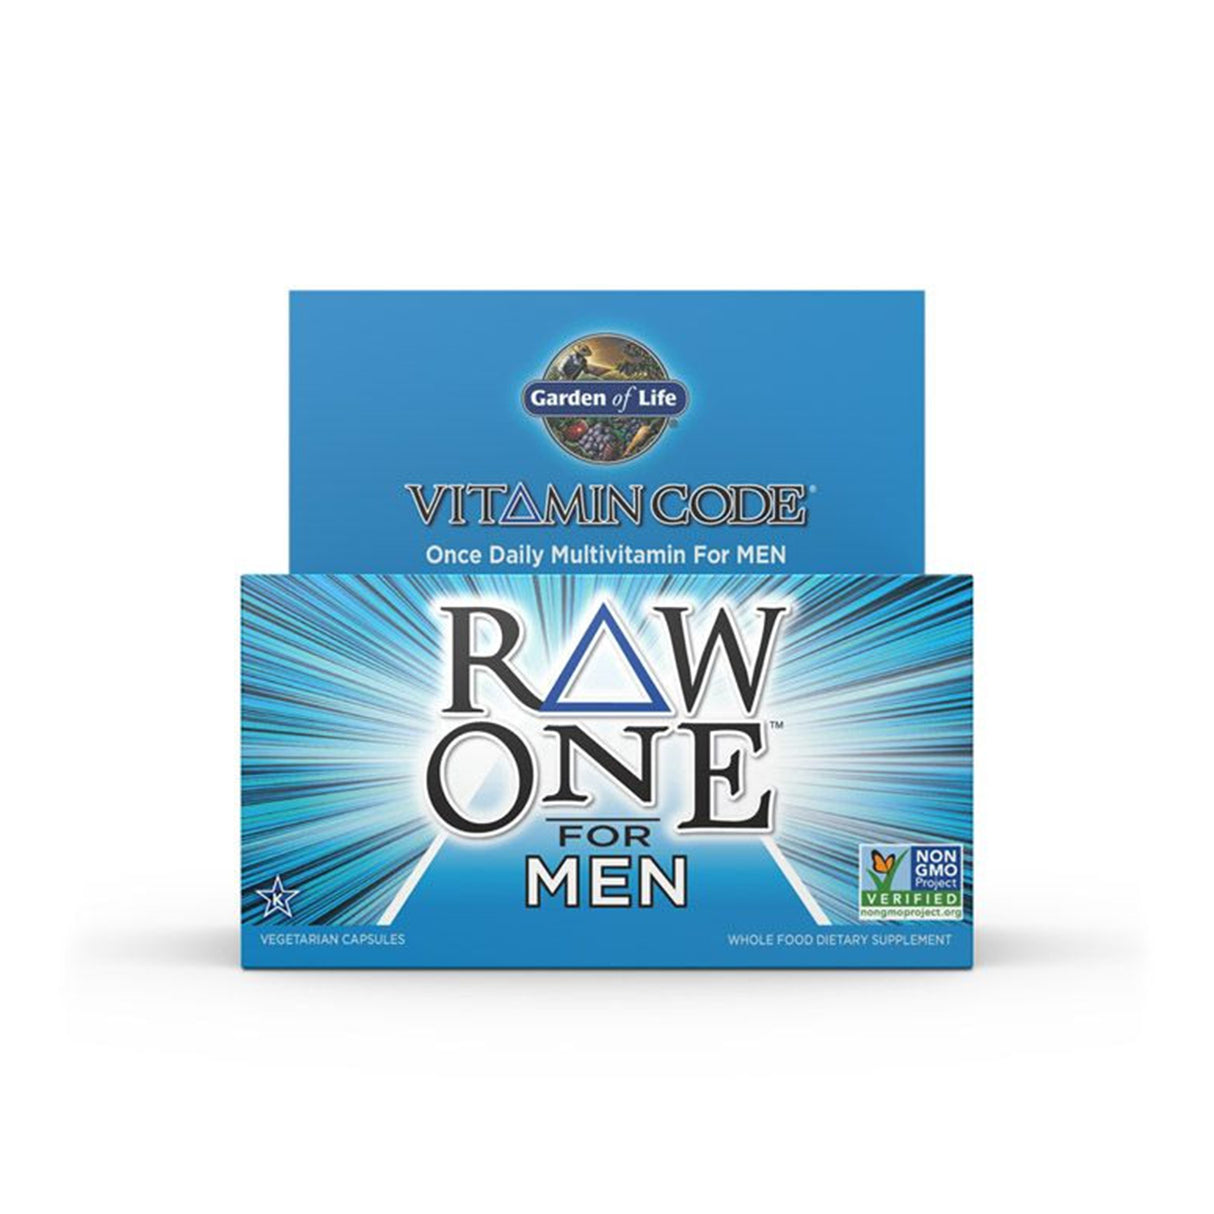 Garden of Life Vitamin Code Raw One for Men Multivitamin 75 Capsules